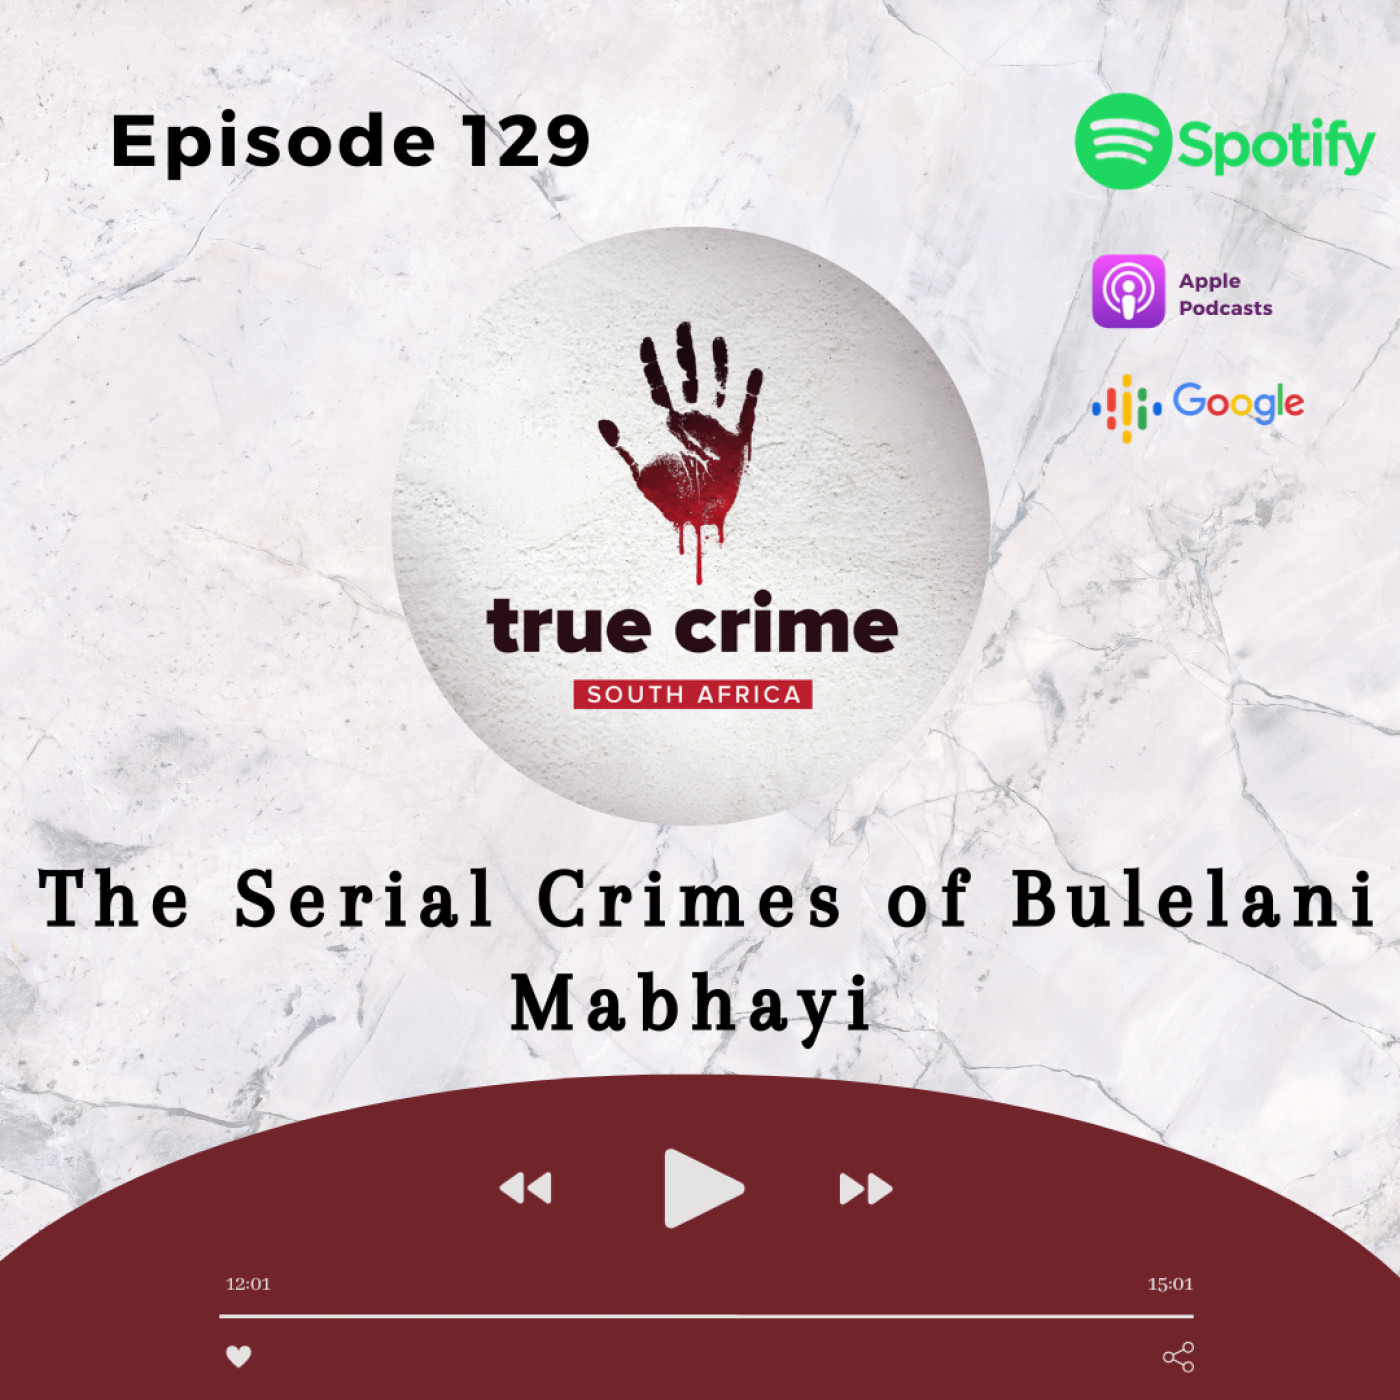 Episode 129 The Serial Crimes of Bulelani Mabhayi